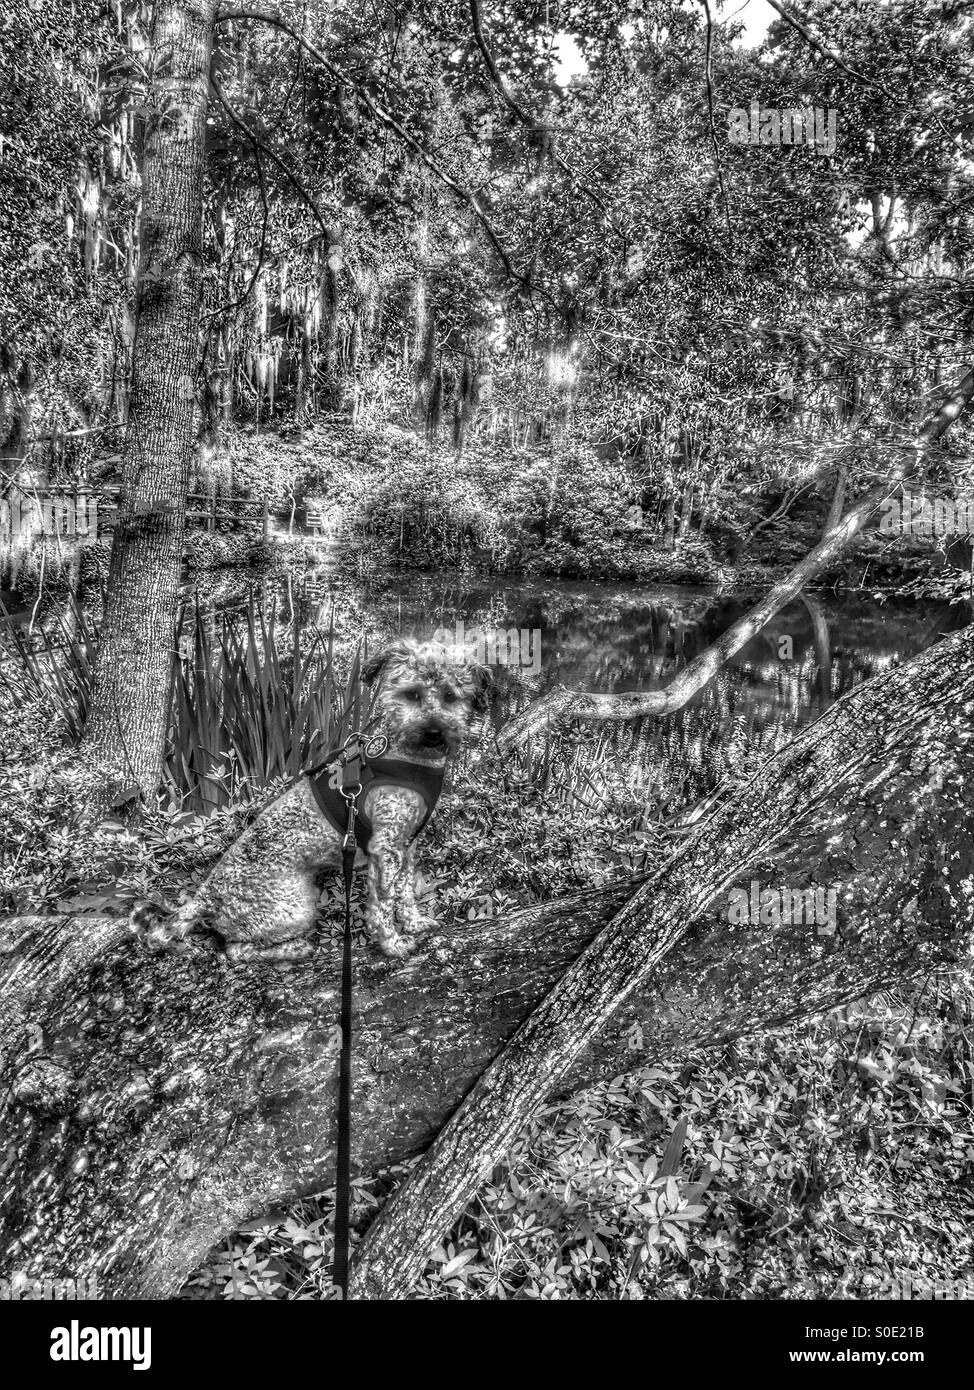 Poodle over swamp on plantation Stock Photo